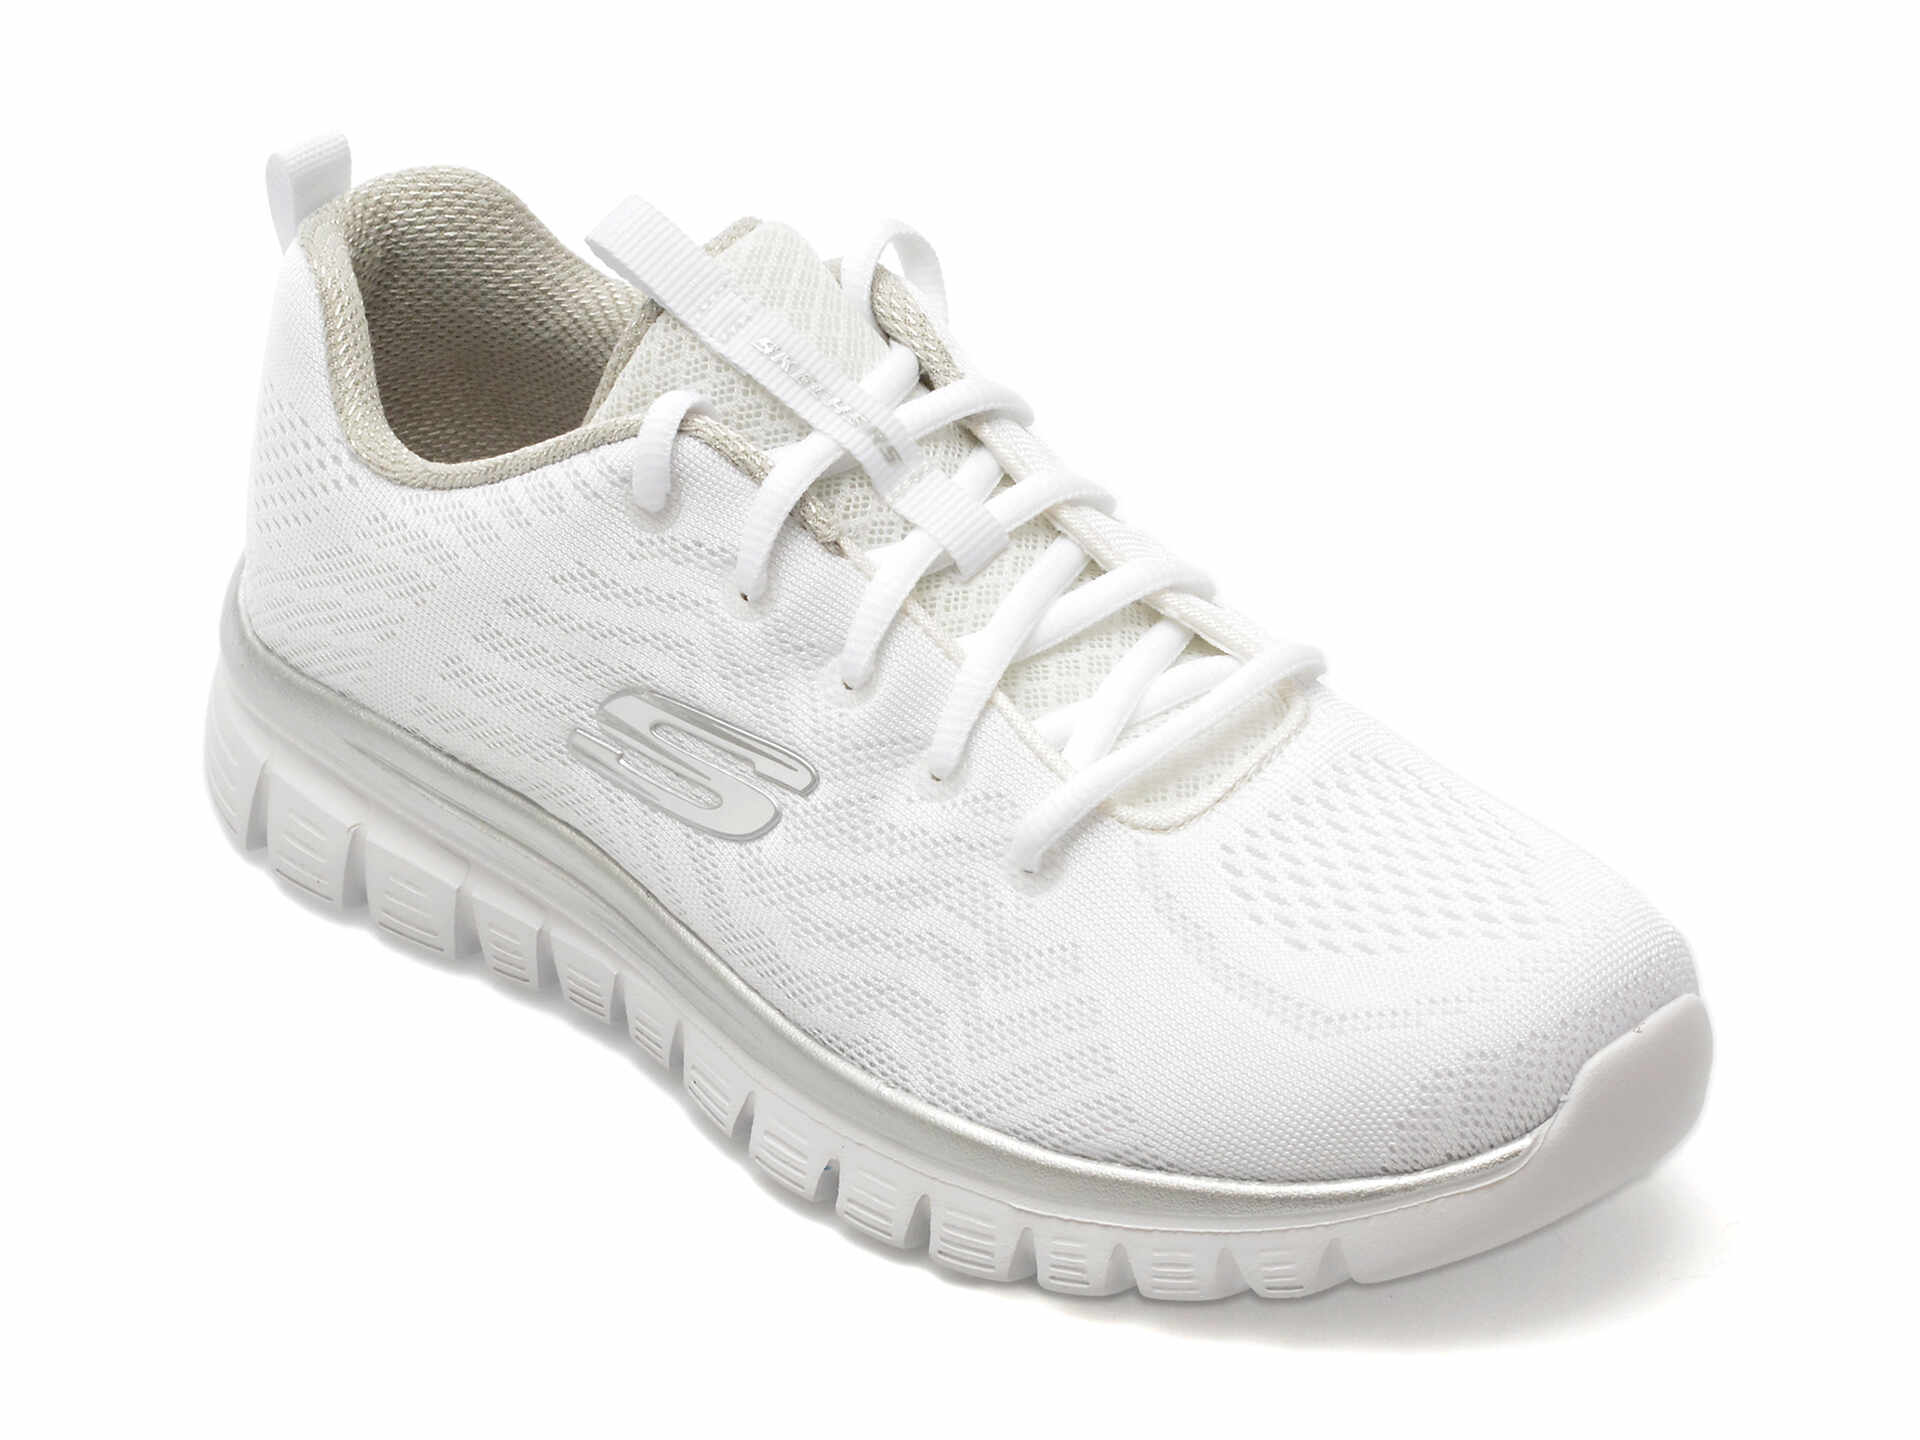 Pantofi sport SKECHERS albi, GRACEFUL, din material textil